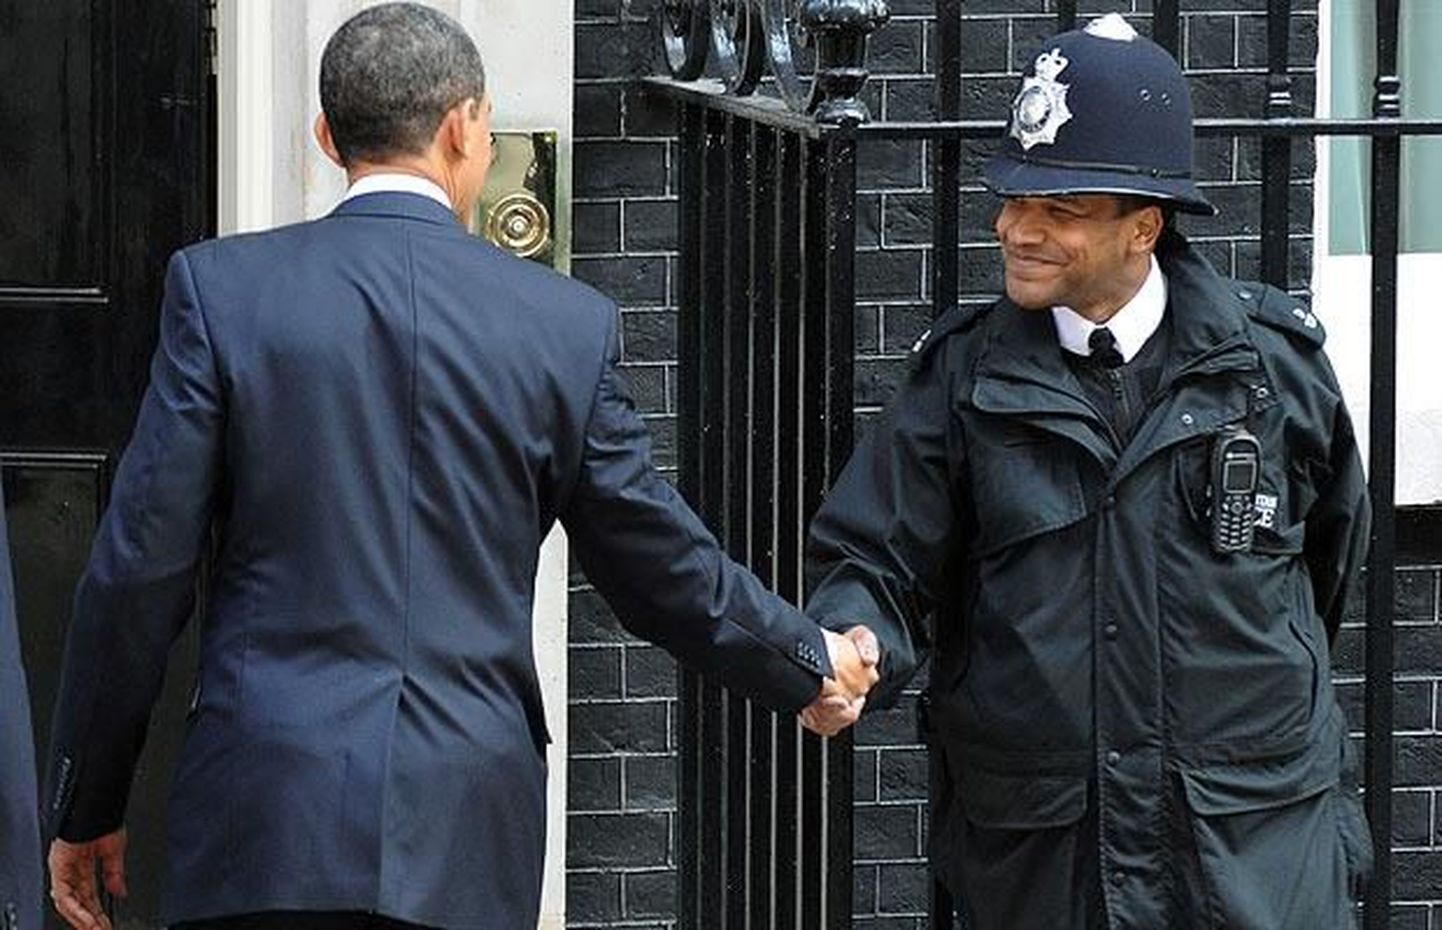 Briti peaministri David Cameroni residentsi Downing St 10 sisenev USA president Barack Obama kätlemas politseikonstaabli Michael Zamoraga.